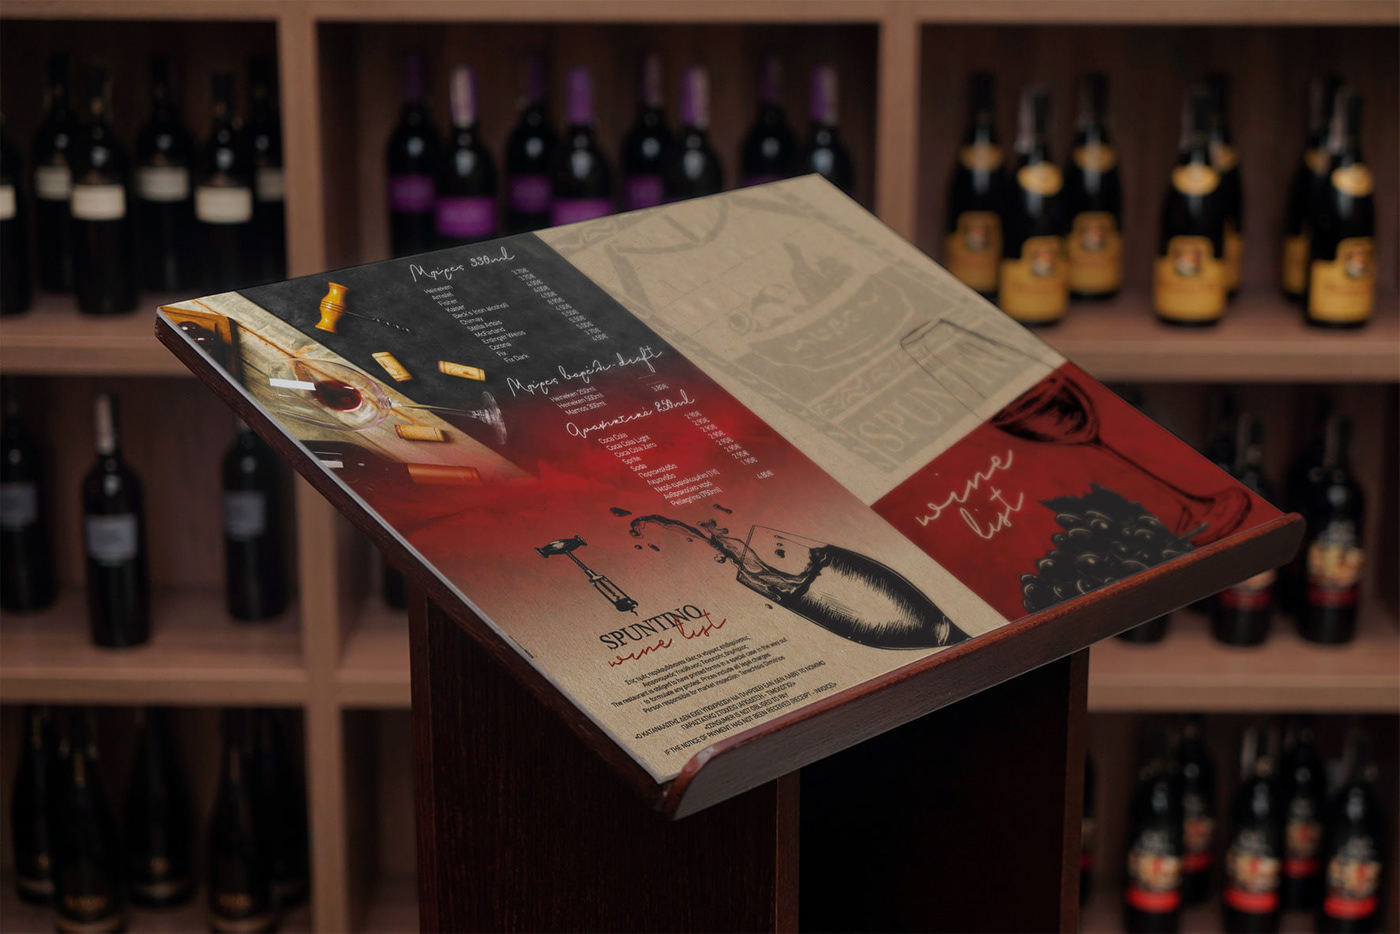 Wine list for Spuntino | Ioannina
Wine list 